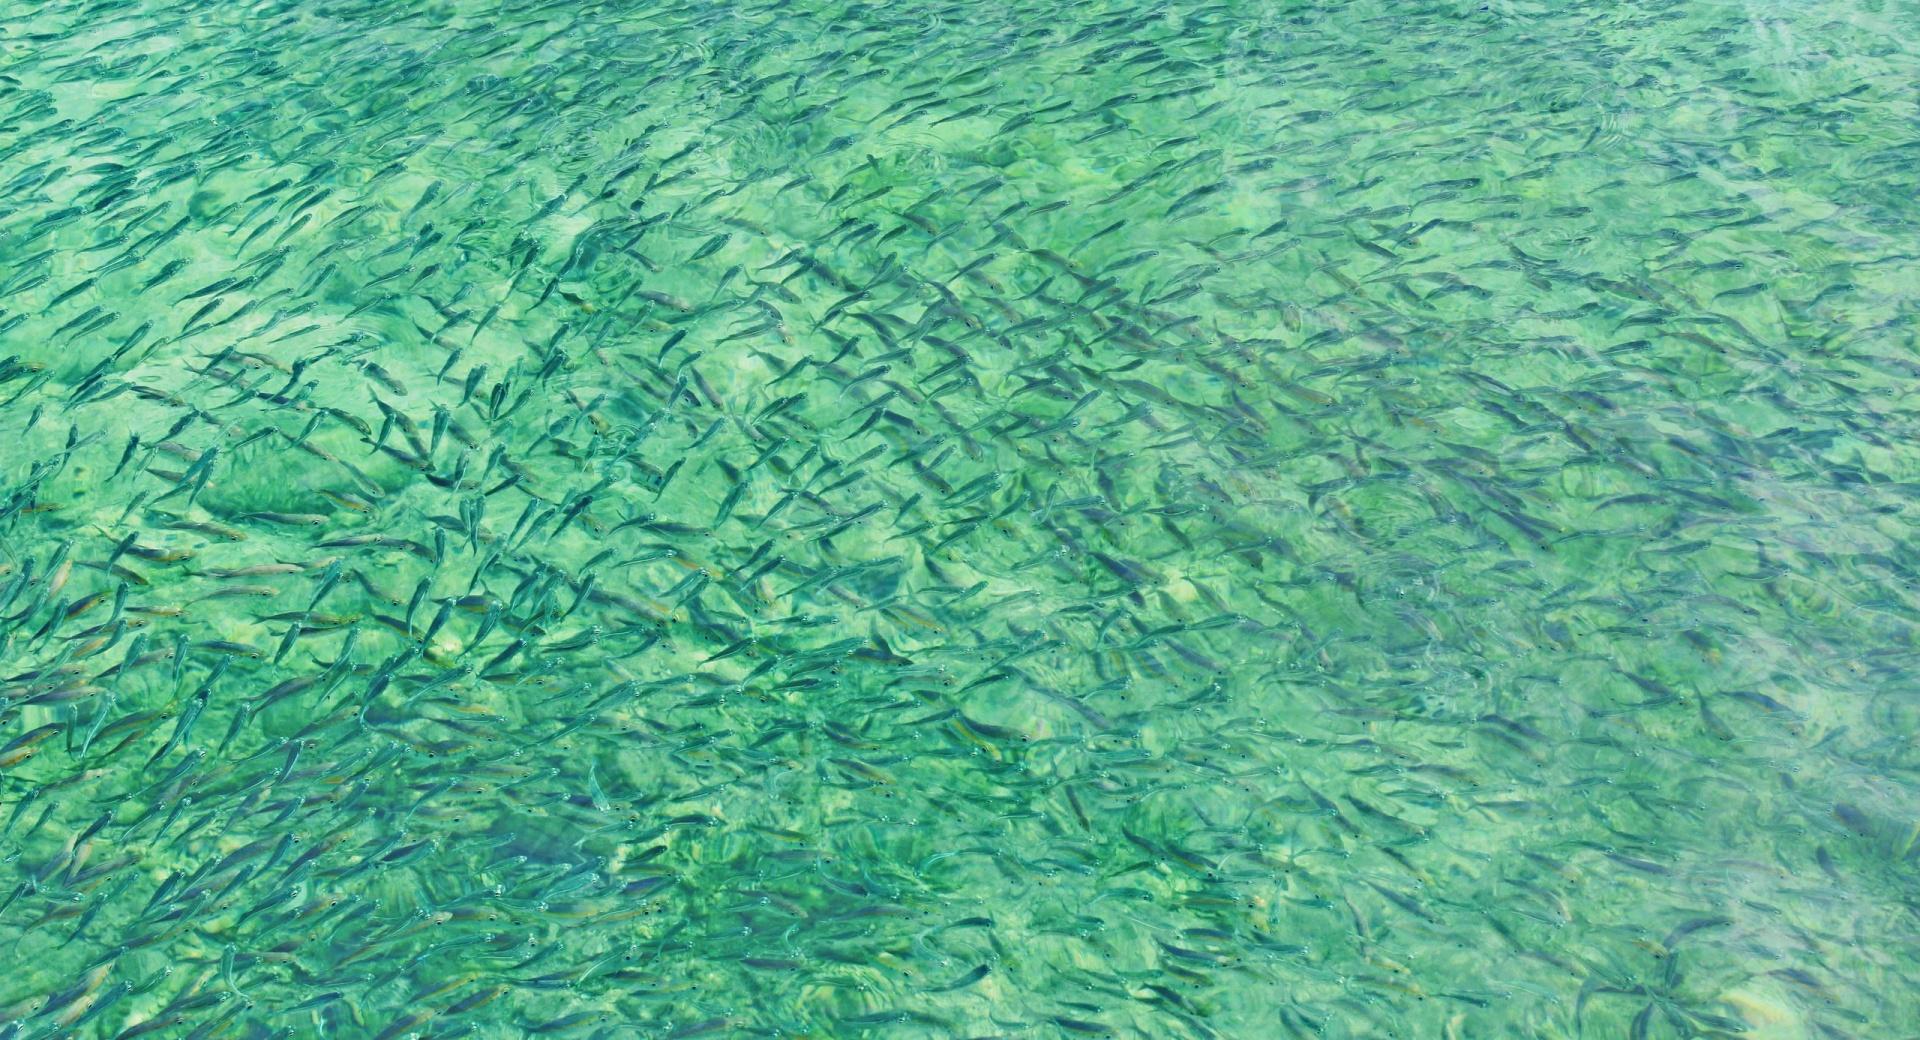 Ikan Ikan Kecil wallpapers HD quality